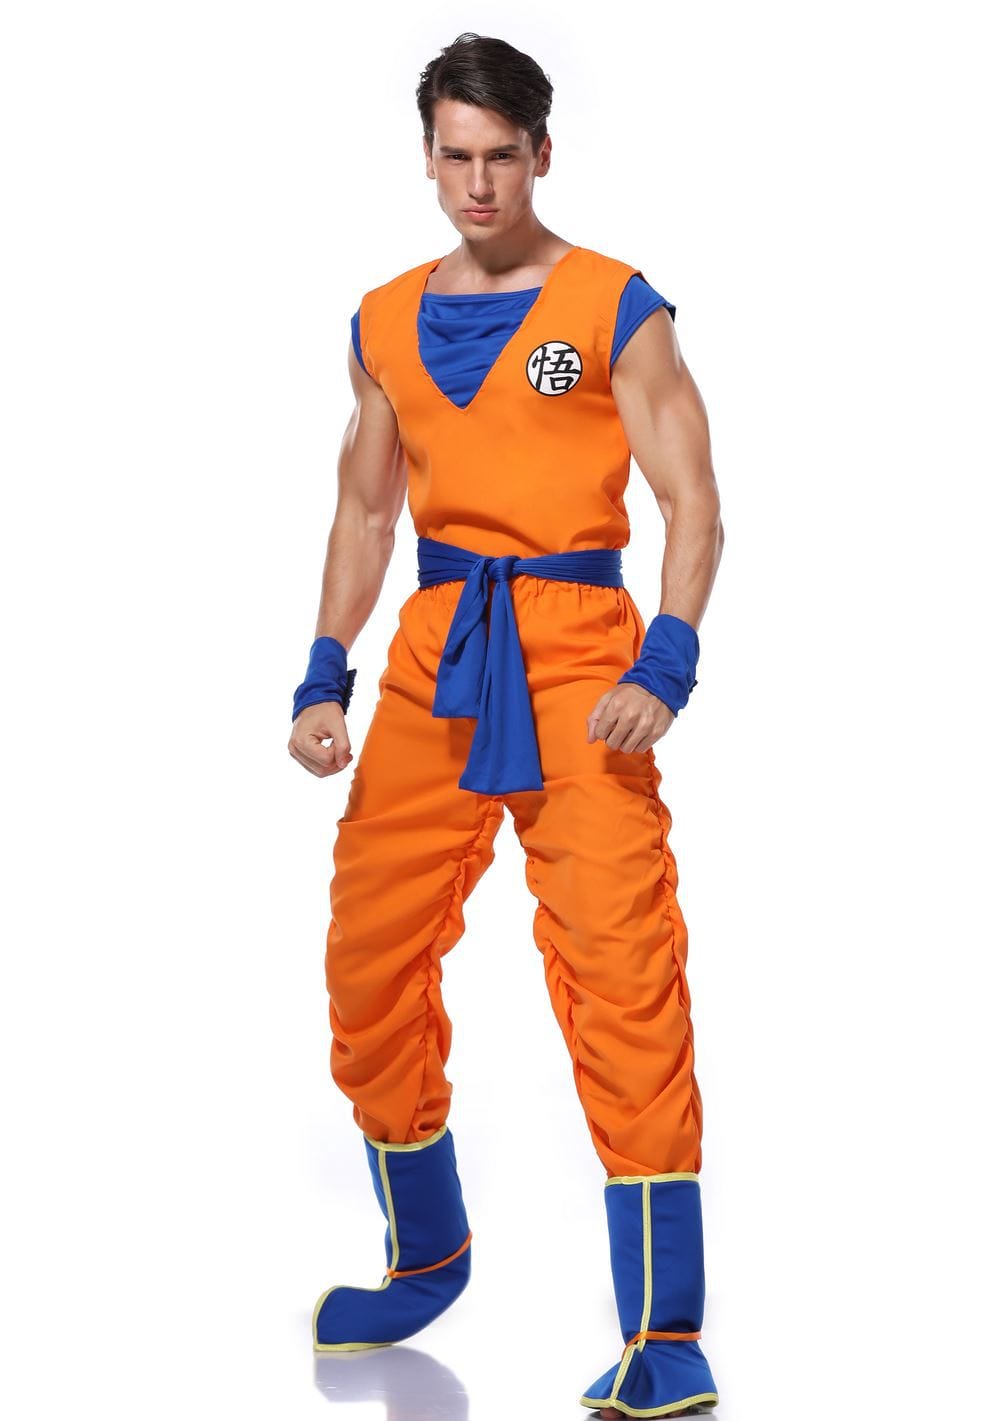  Goku Costume for Kids Boys Dragon Ball Z Costume : Clothing,  Shoes & Jewelry